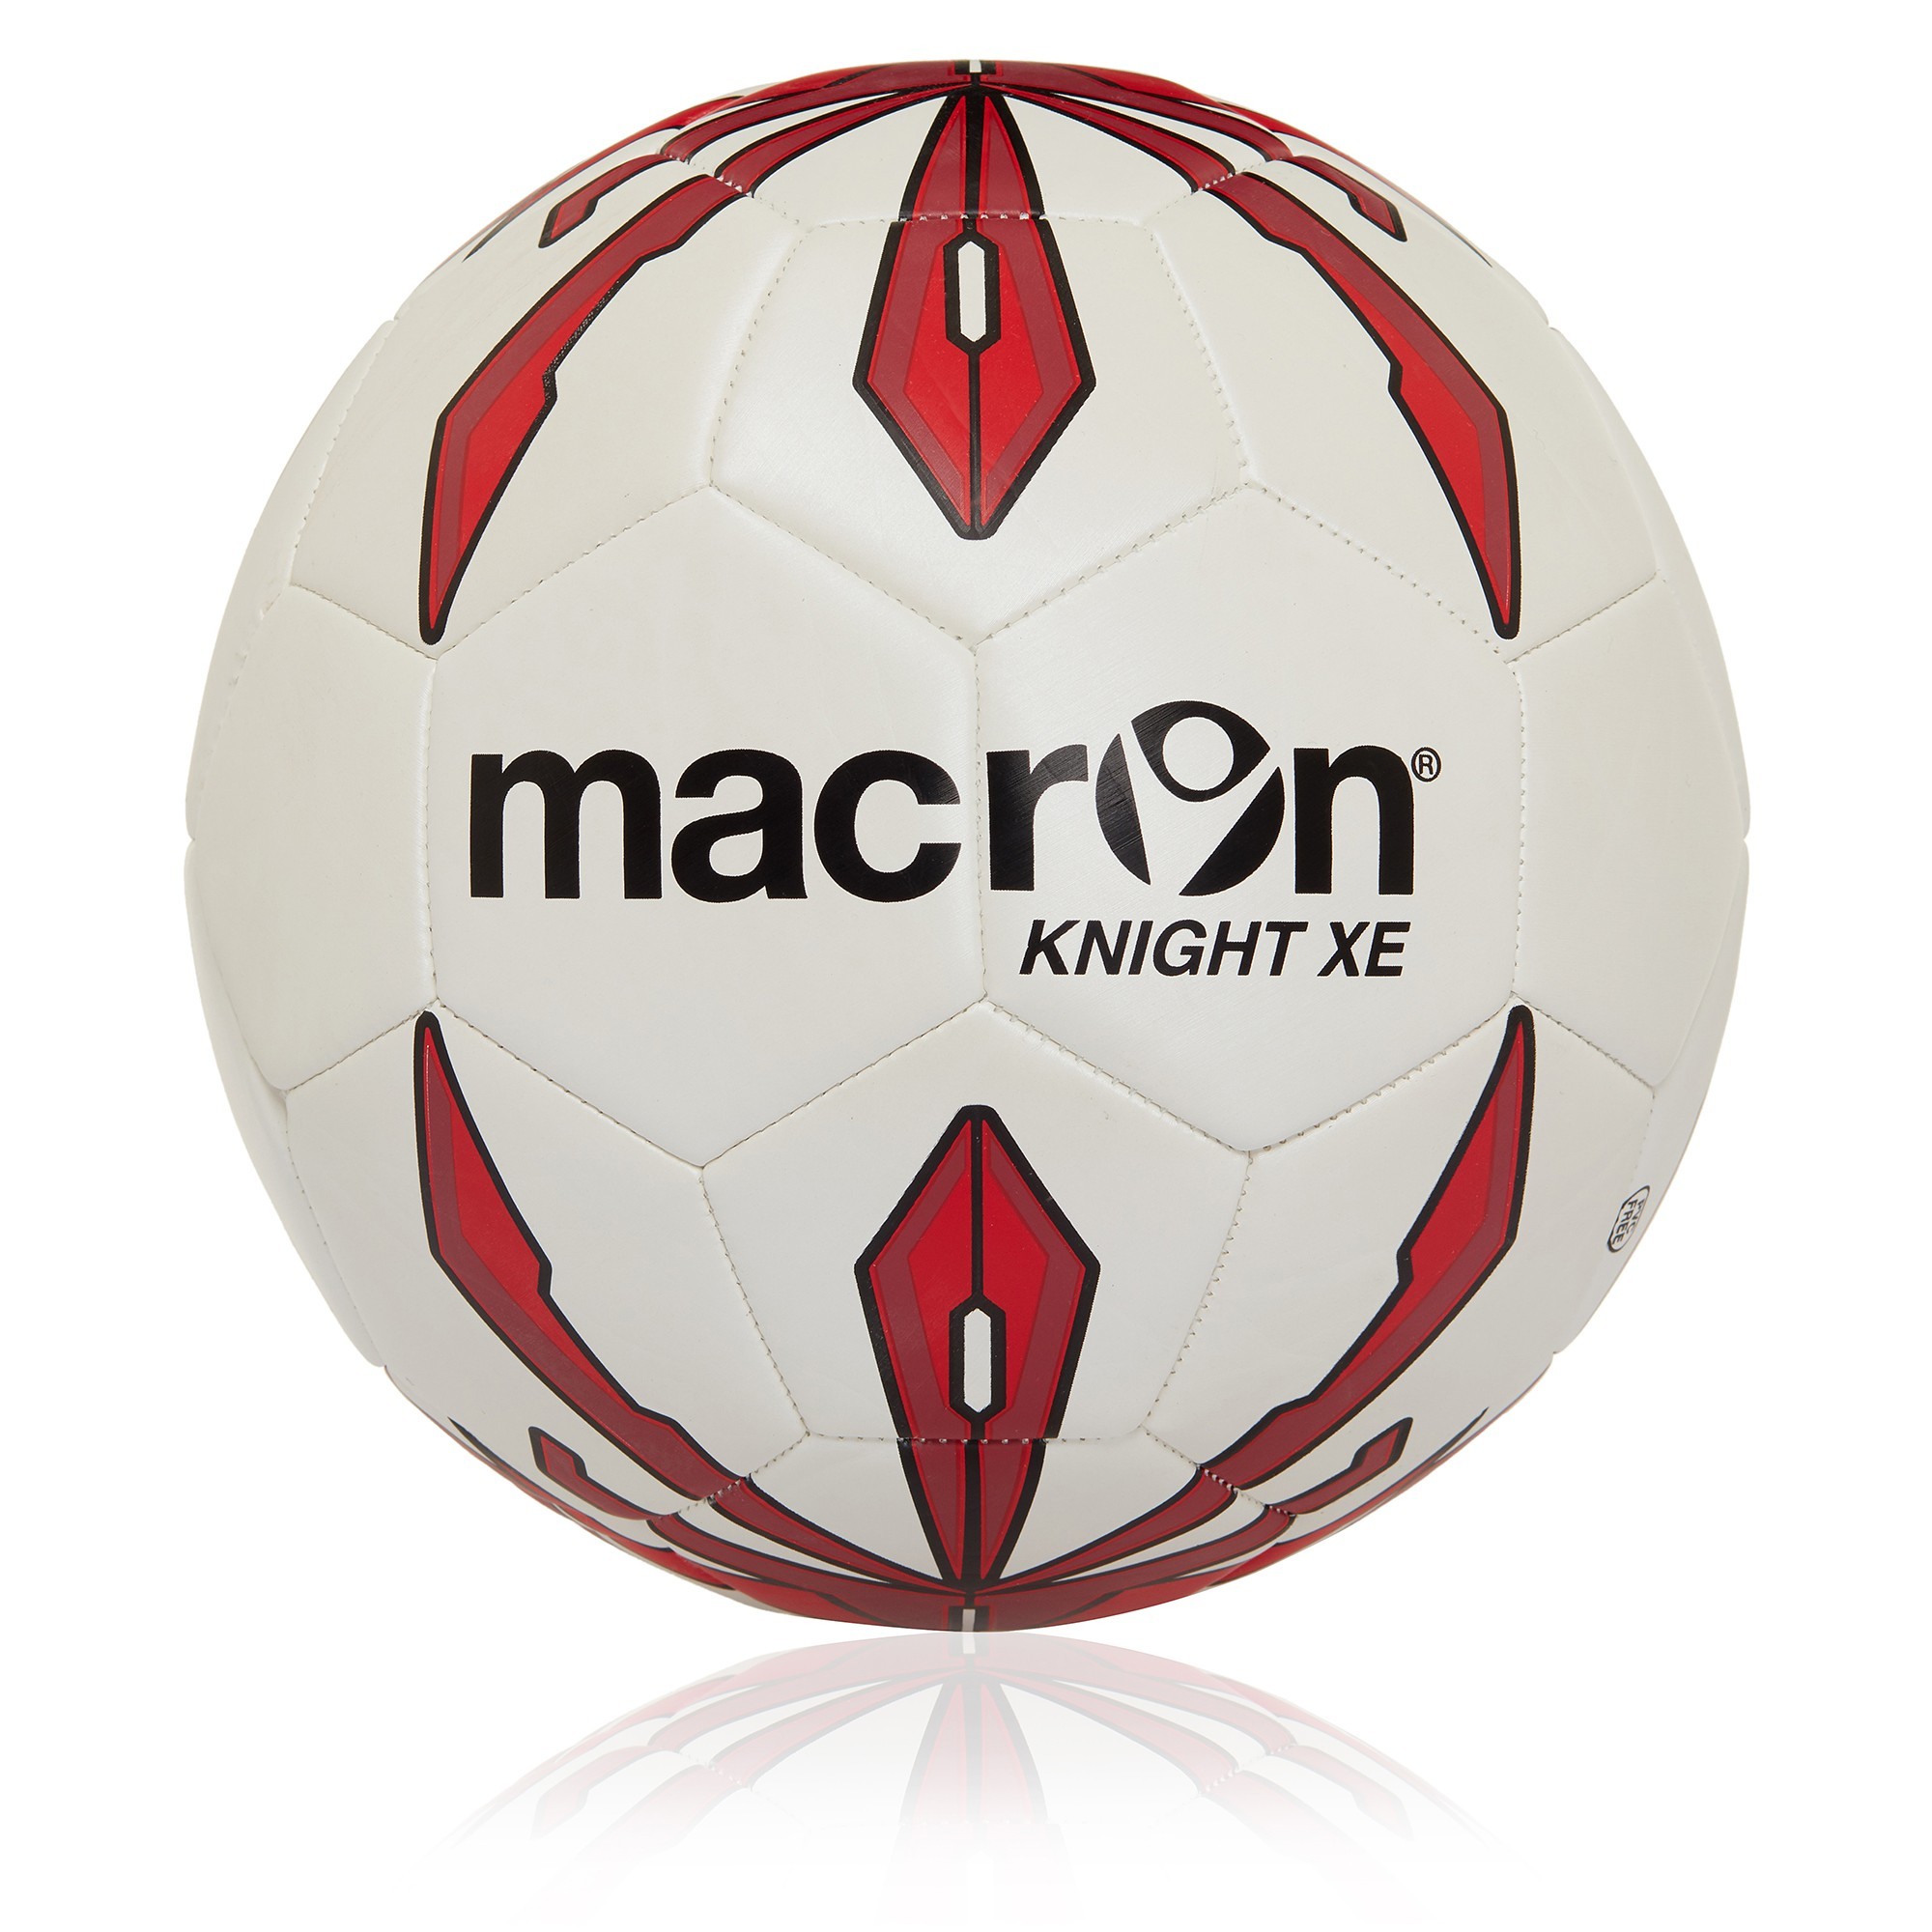 Fifa quality pro. Мяч Macron Solstice XF (IMS), размер 5. Мяч Macron Dew XH (FIFA quality), арт. 5827104, Размер 5. Мяч Macron Solstice XF (IMS).